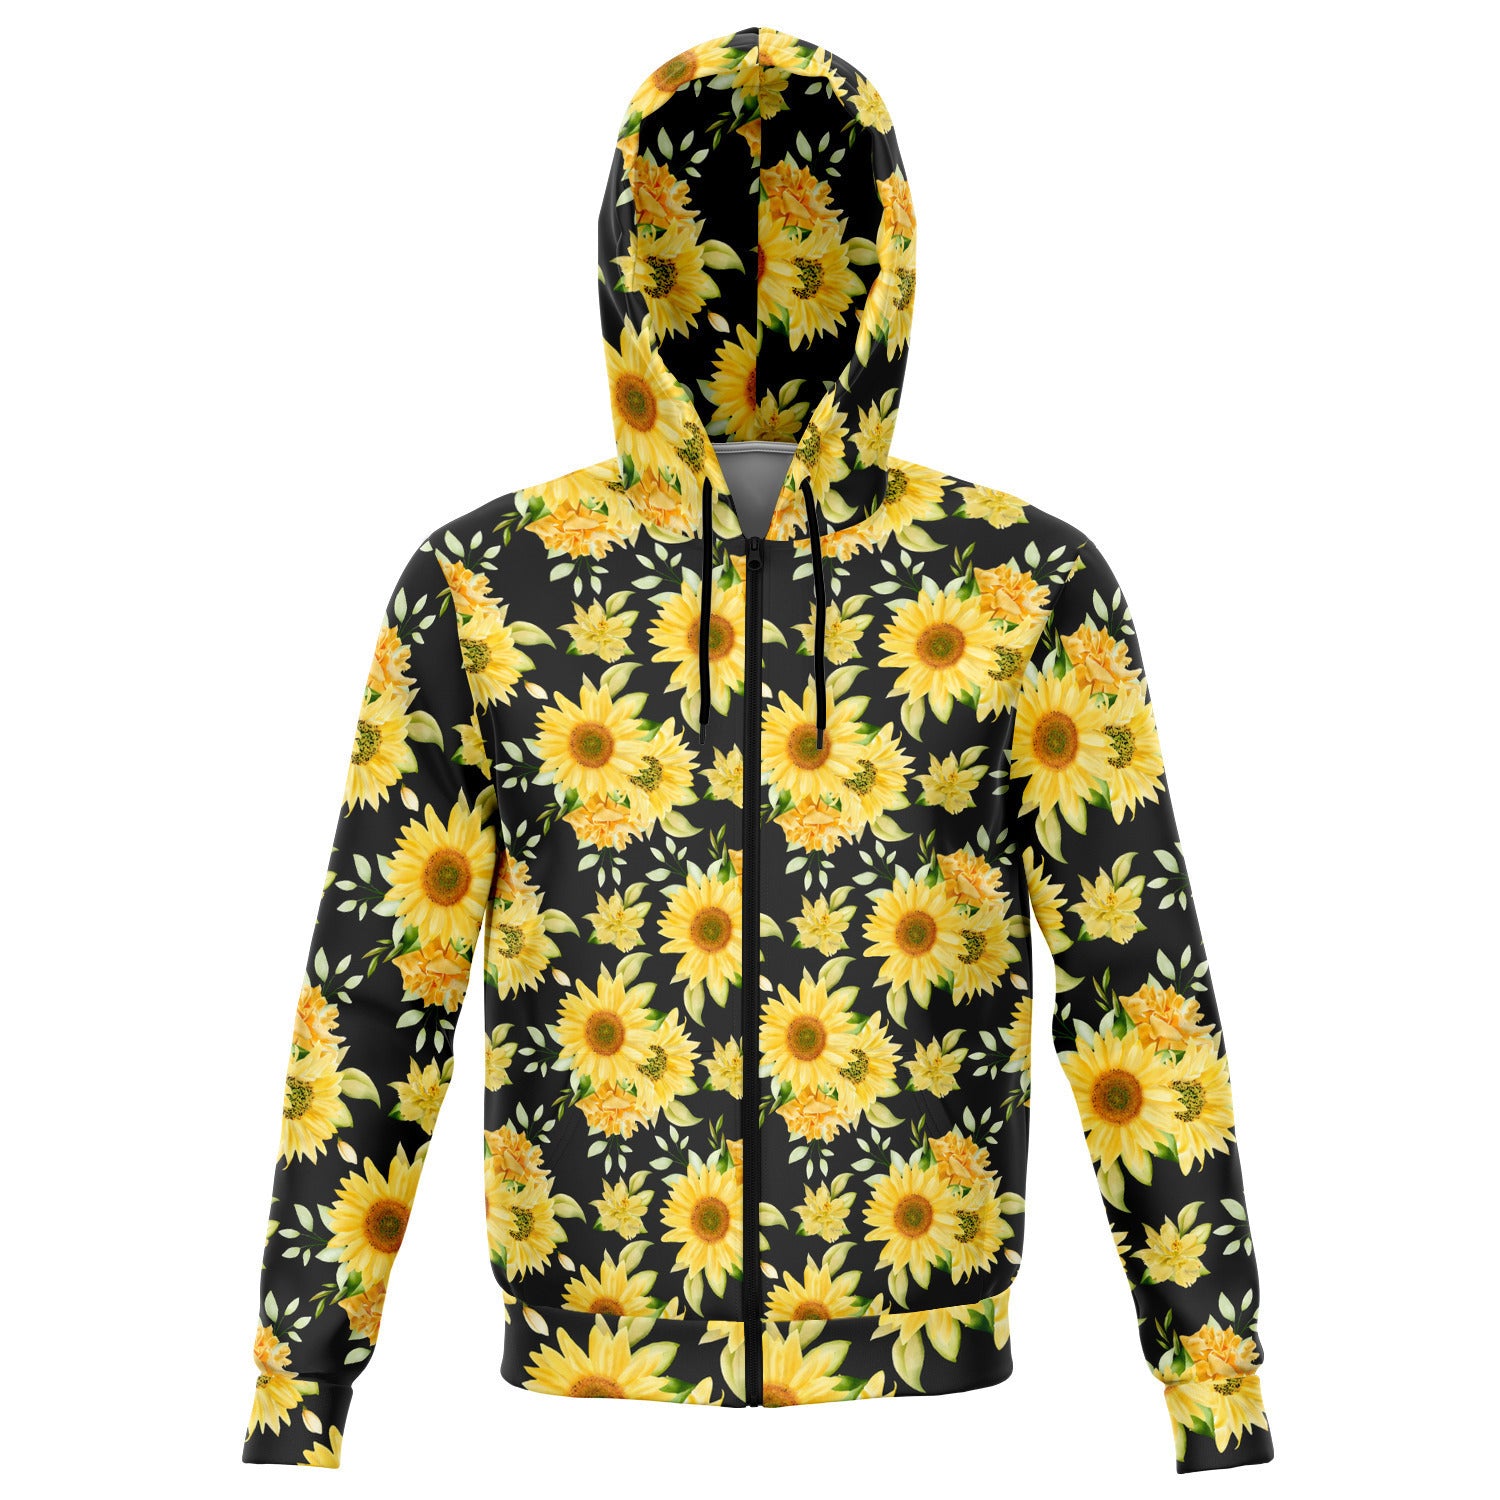 Sunflower Zip Up Hoodie, Yellow Black Flowers Floral Front Zip Pocket Men Women Adult Aesthetic Graphic Cotton Hooded Sweatshirt Starcove Fashion